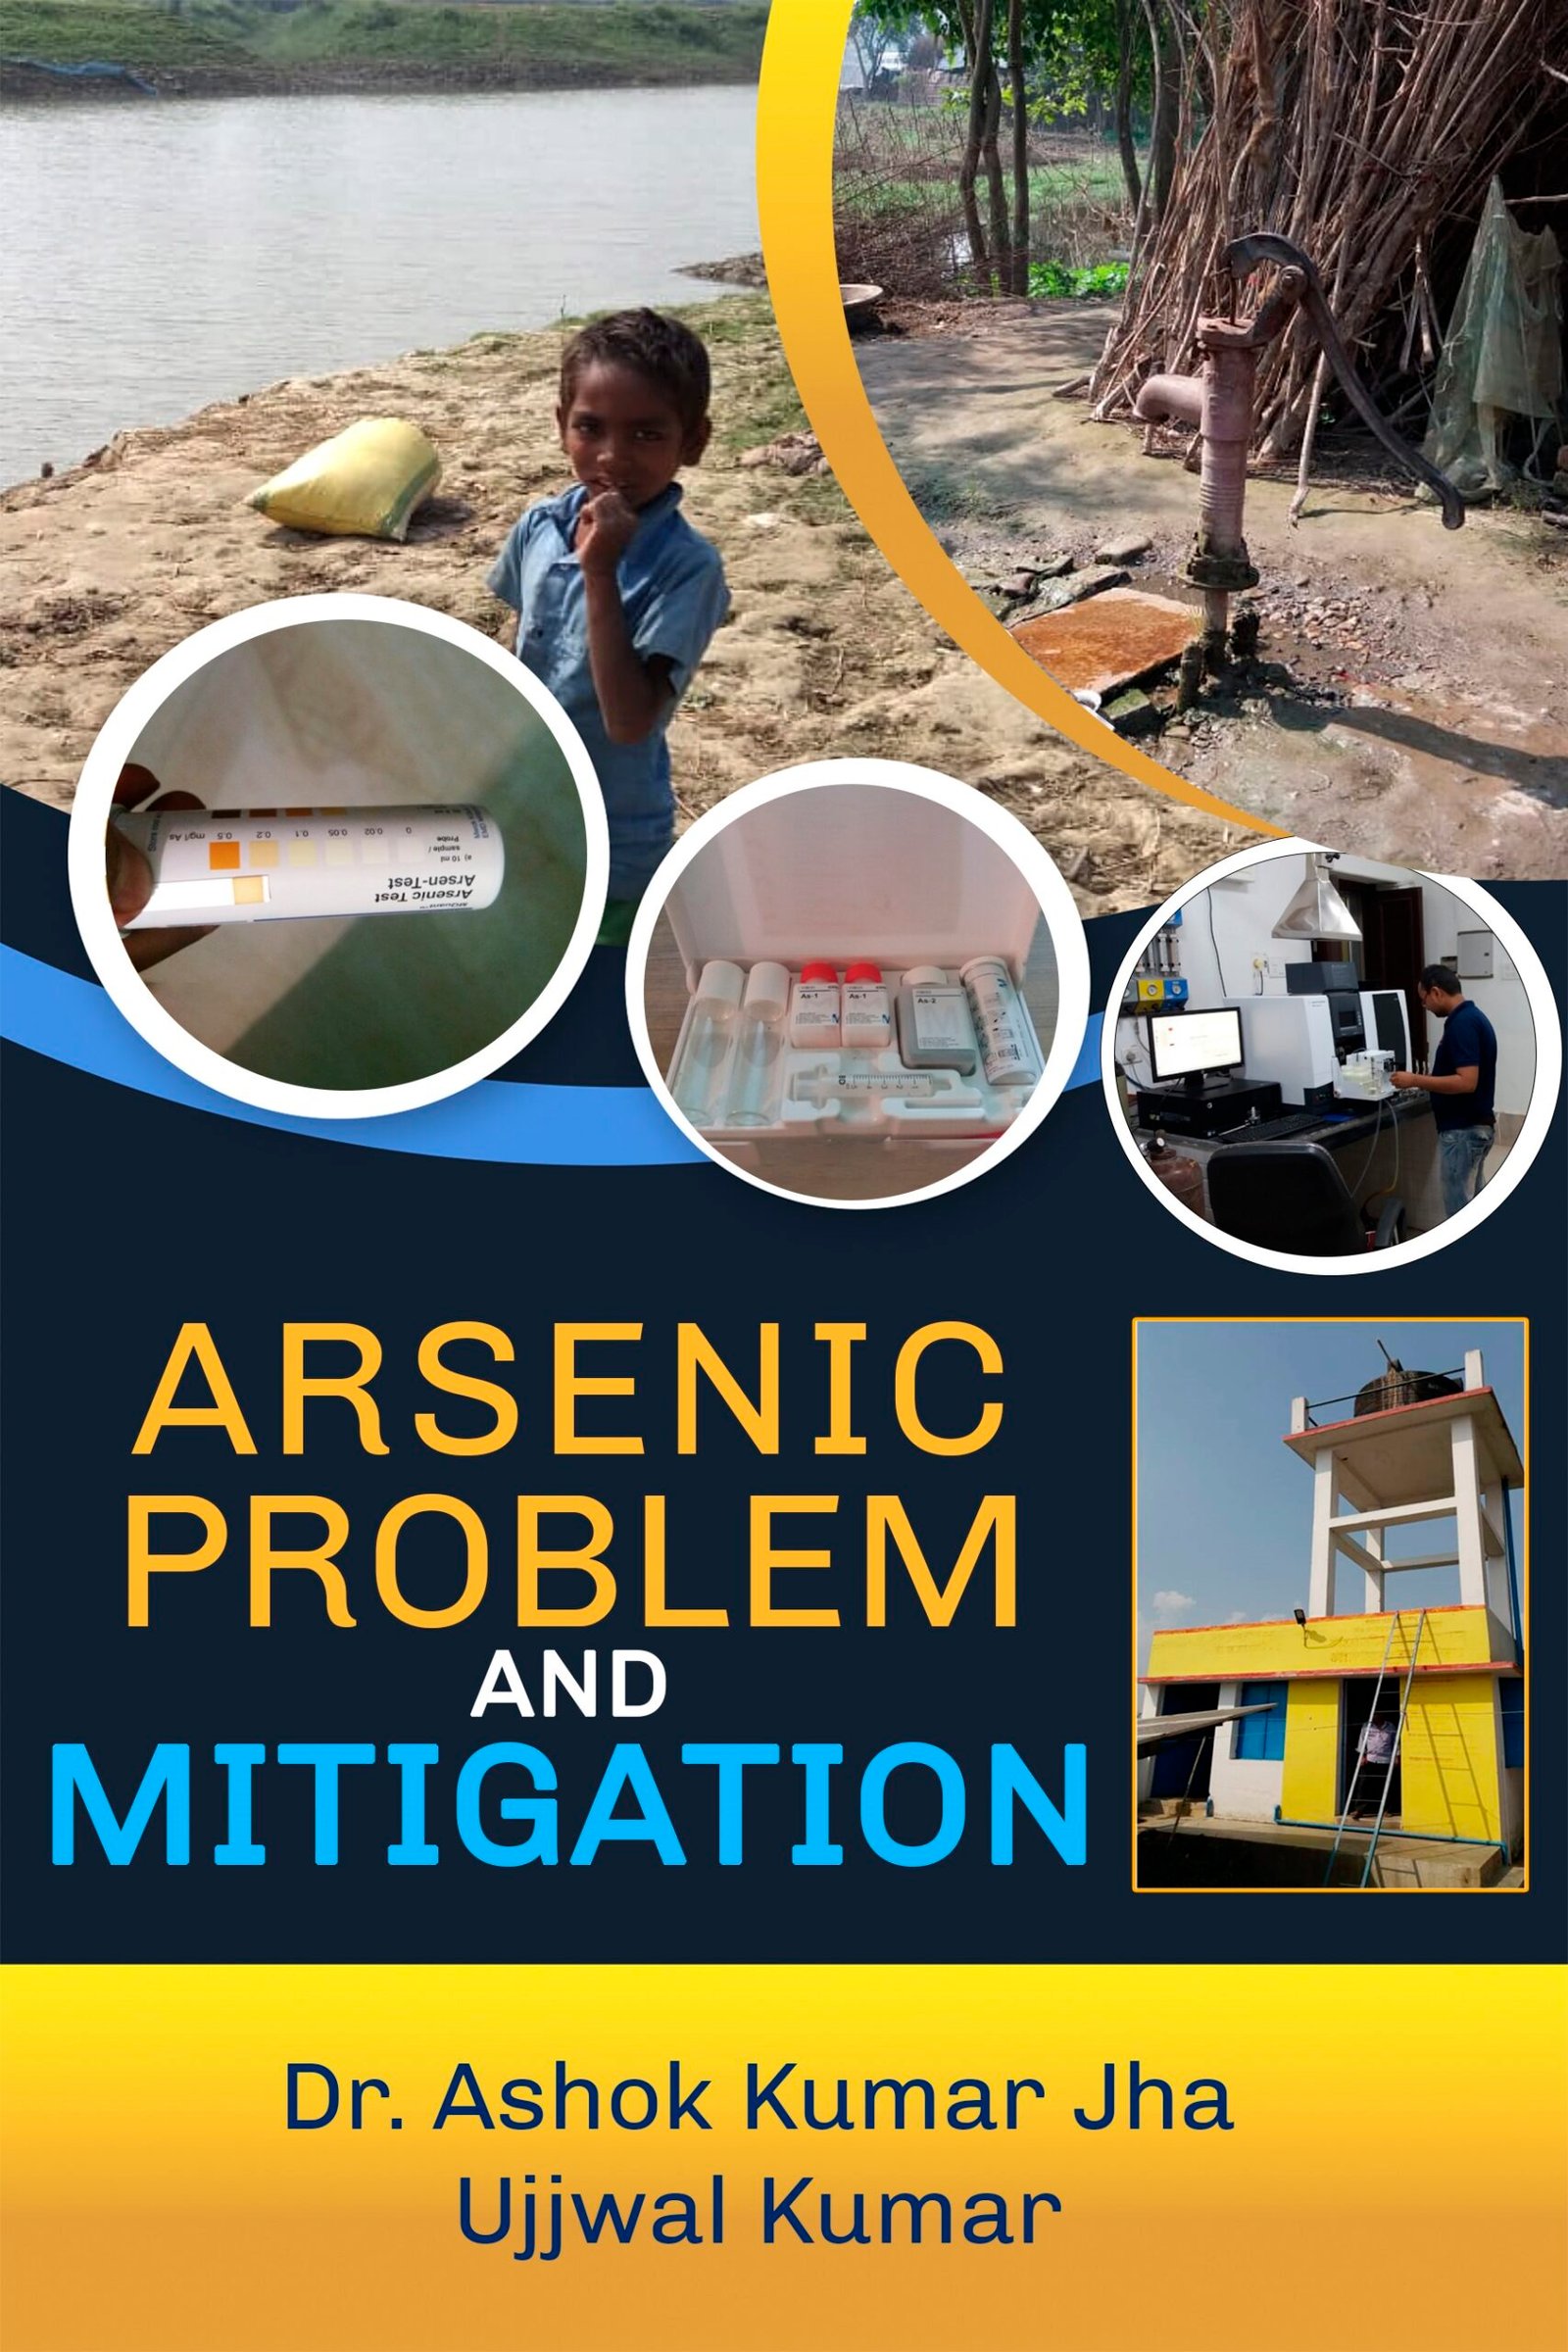 ARSENIC PROBLEM AND MITIGATION BY (Dr. Ashok Kumar Jha , Ujjwal Kumar)